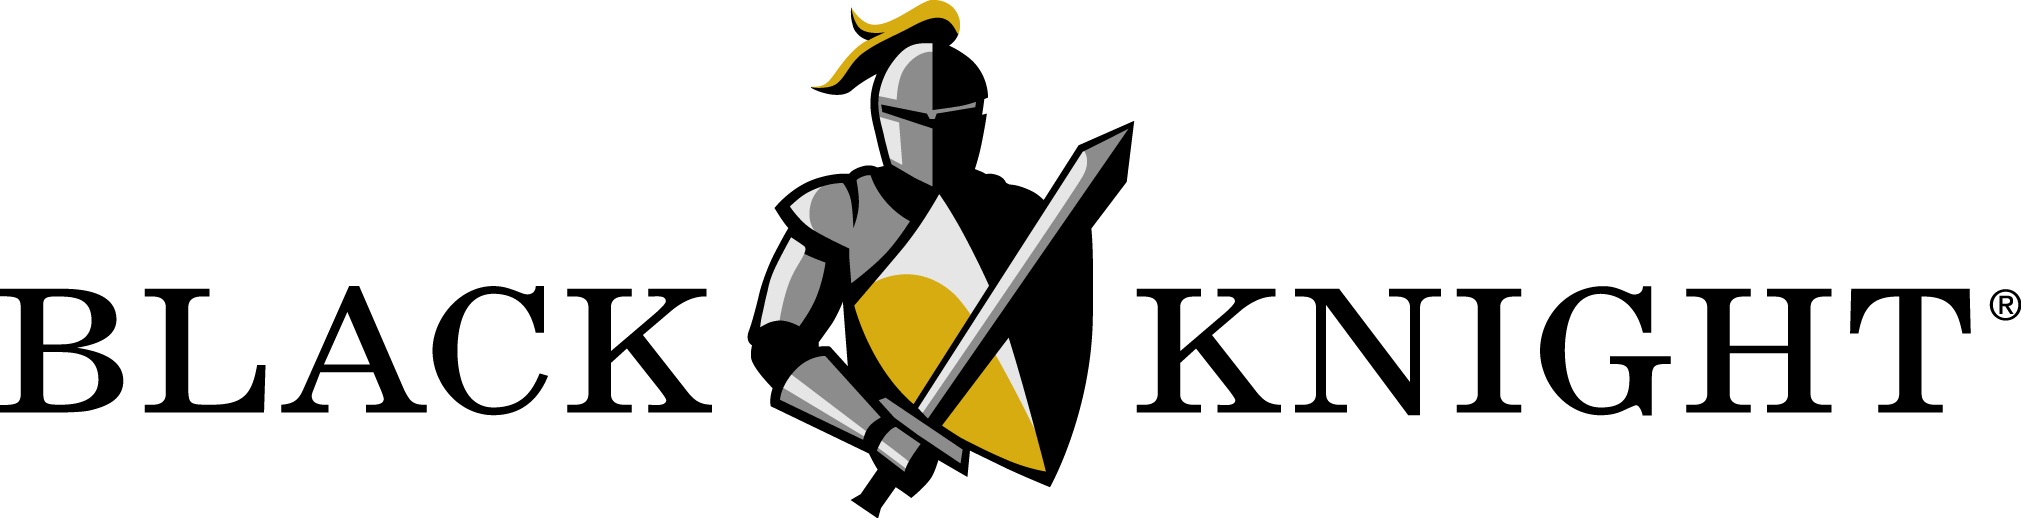 Black Knight Logo - Operation New Uniform | black knight logo